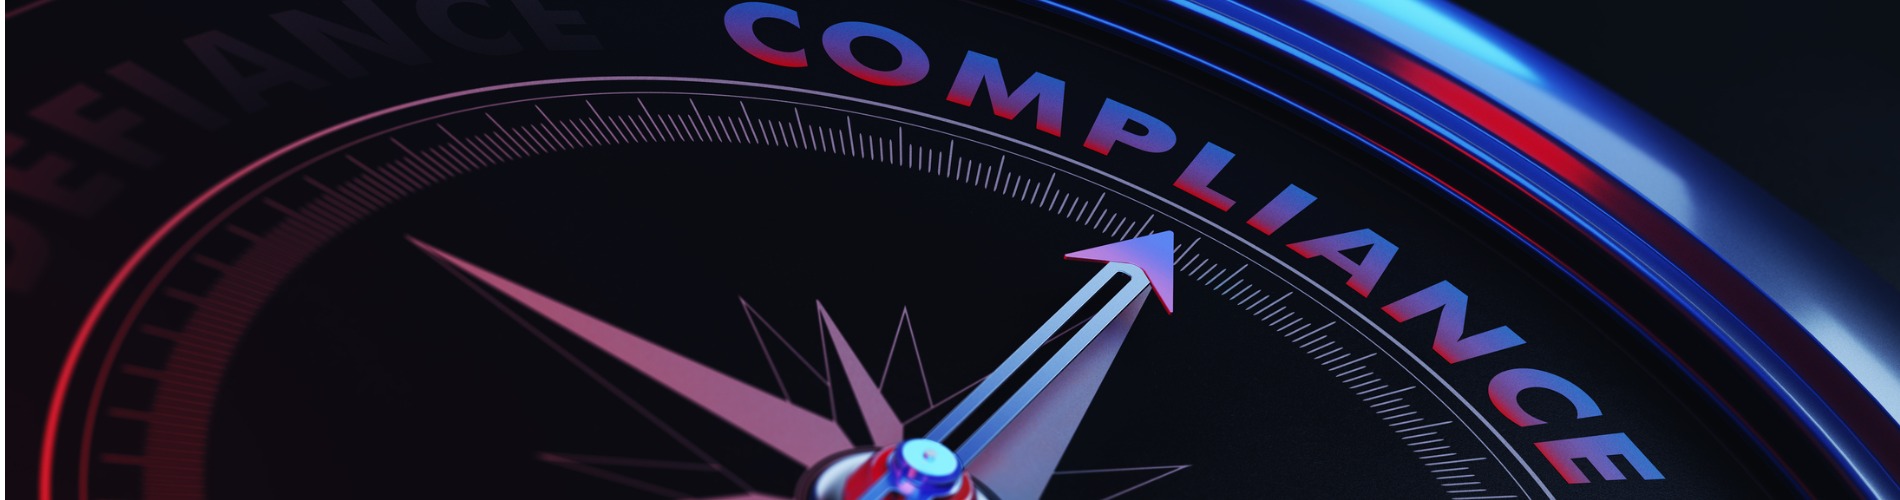 arrow-of-a-compass-compliance-text 1900x500